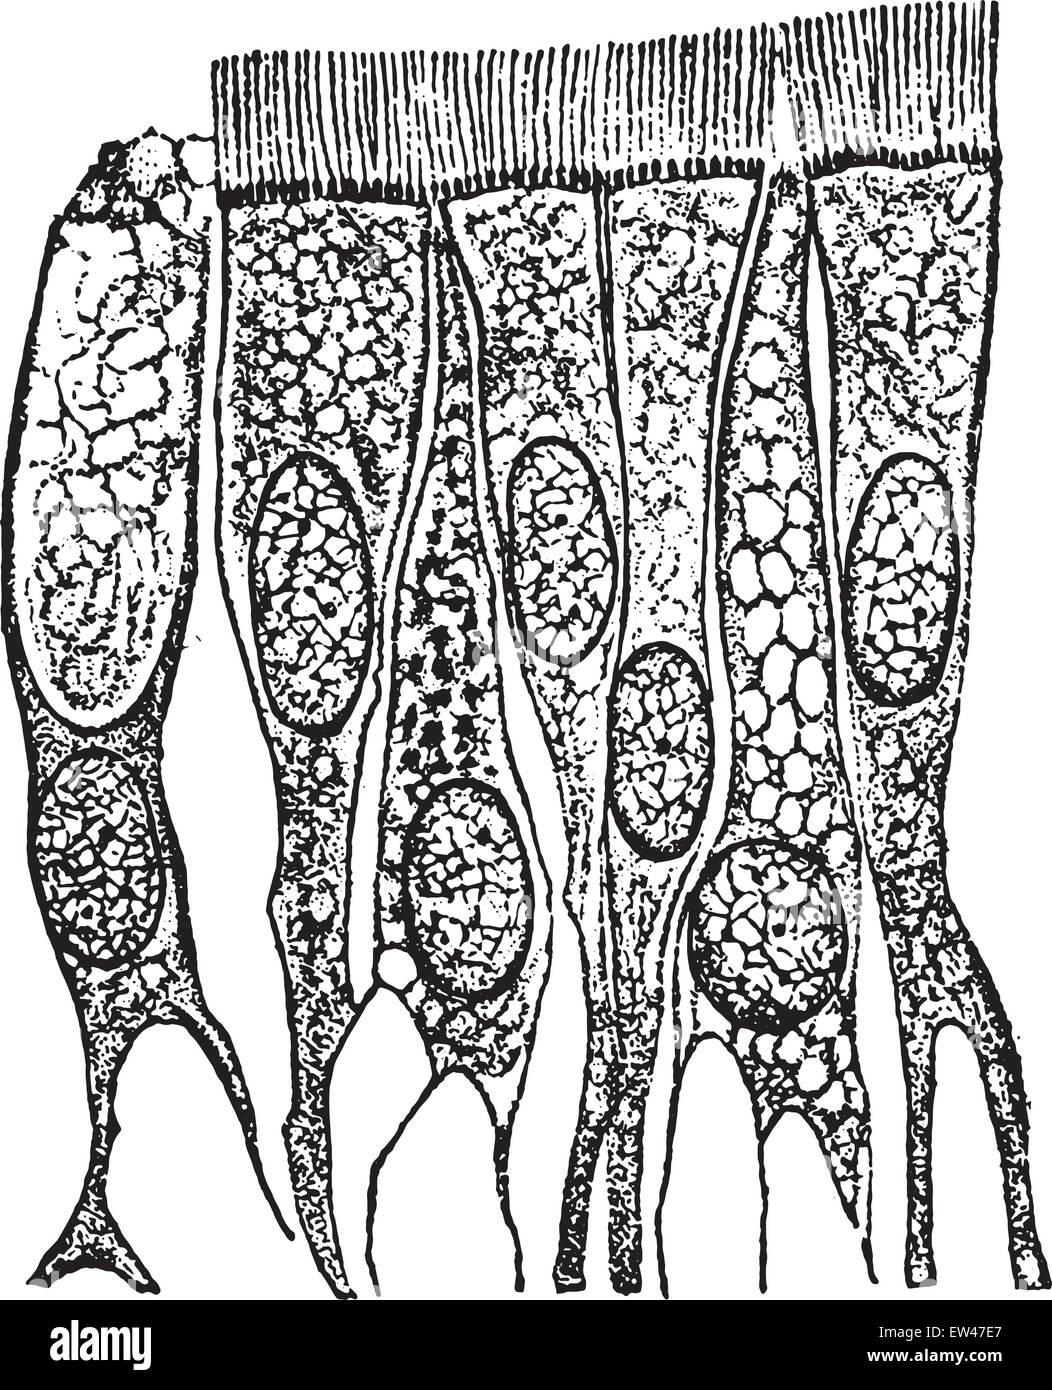 Flimmerepithel Zellen aus dem trachea(windpipe), graviert Vintage Illustration. Stock Vektor